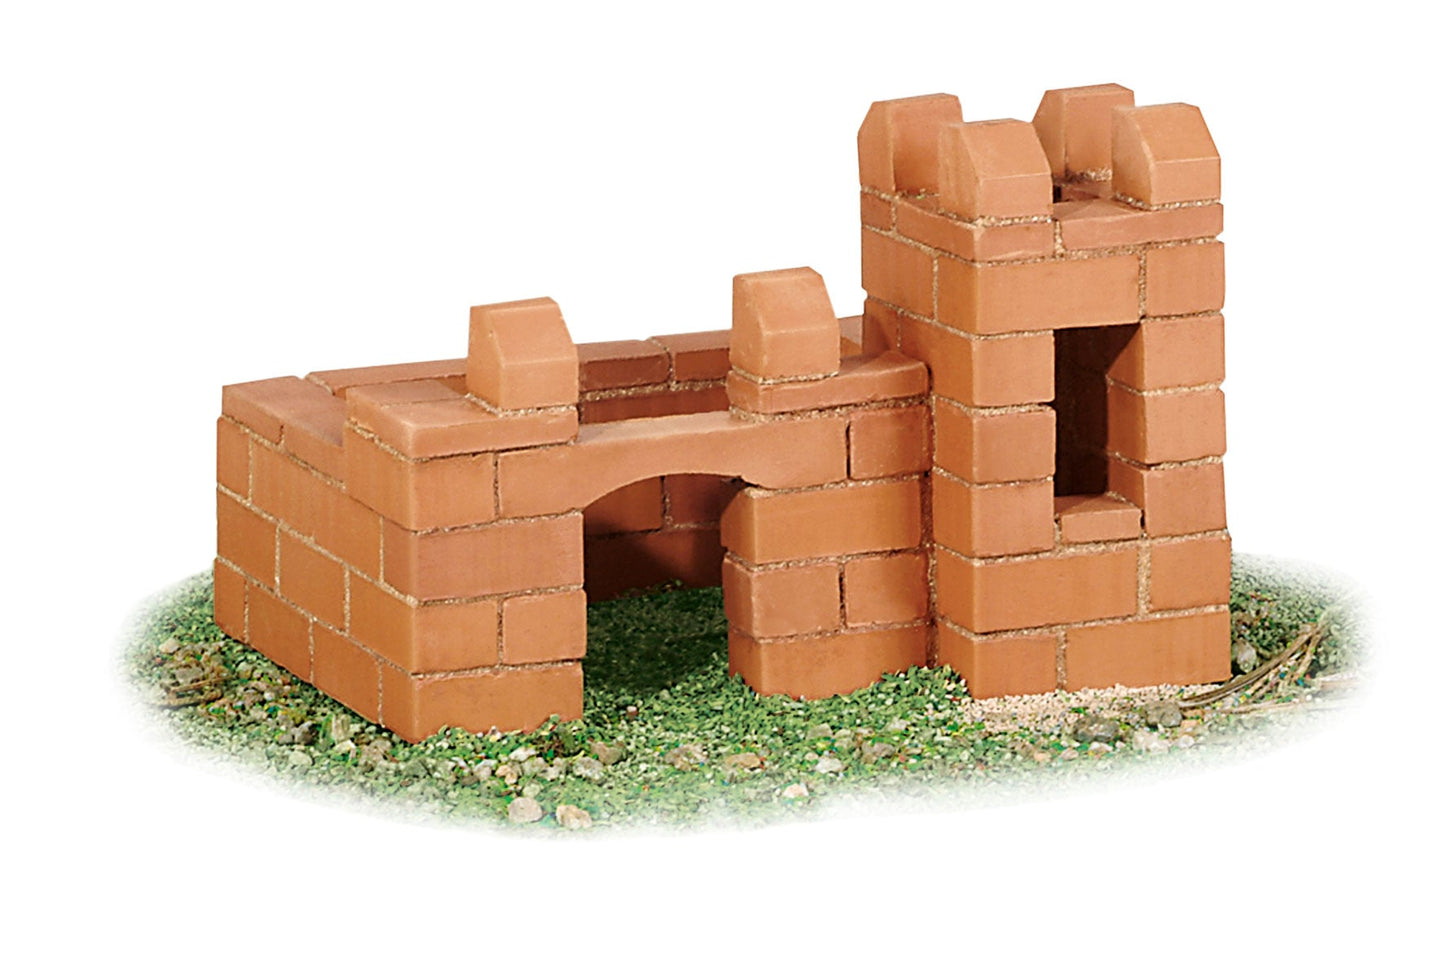 Teifoc Castle Brick